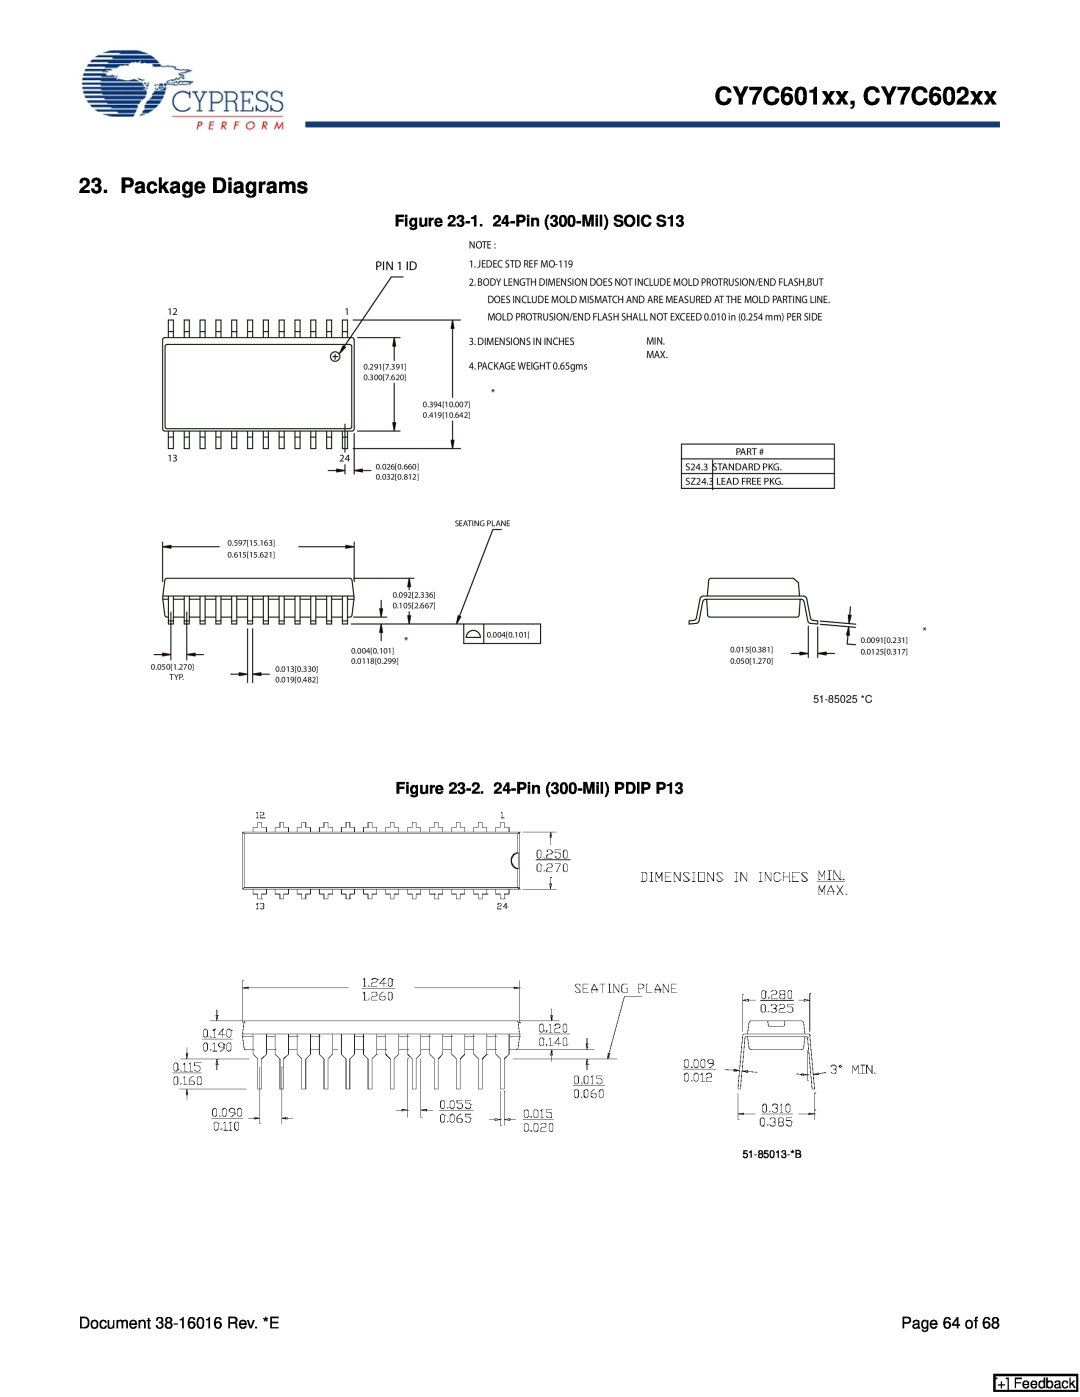 Cypress Package Diagrams, 1. 24-Pin 300-Mil SOIC S13, 2. 24-Pin 300-Mil PDIP P13, CY7C601xx, CY7C602xx, + Feedback 